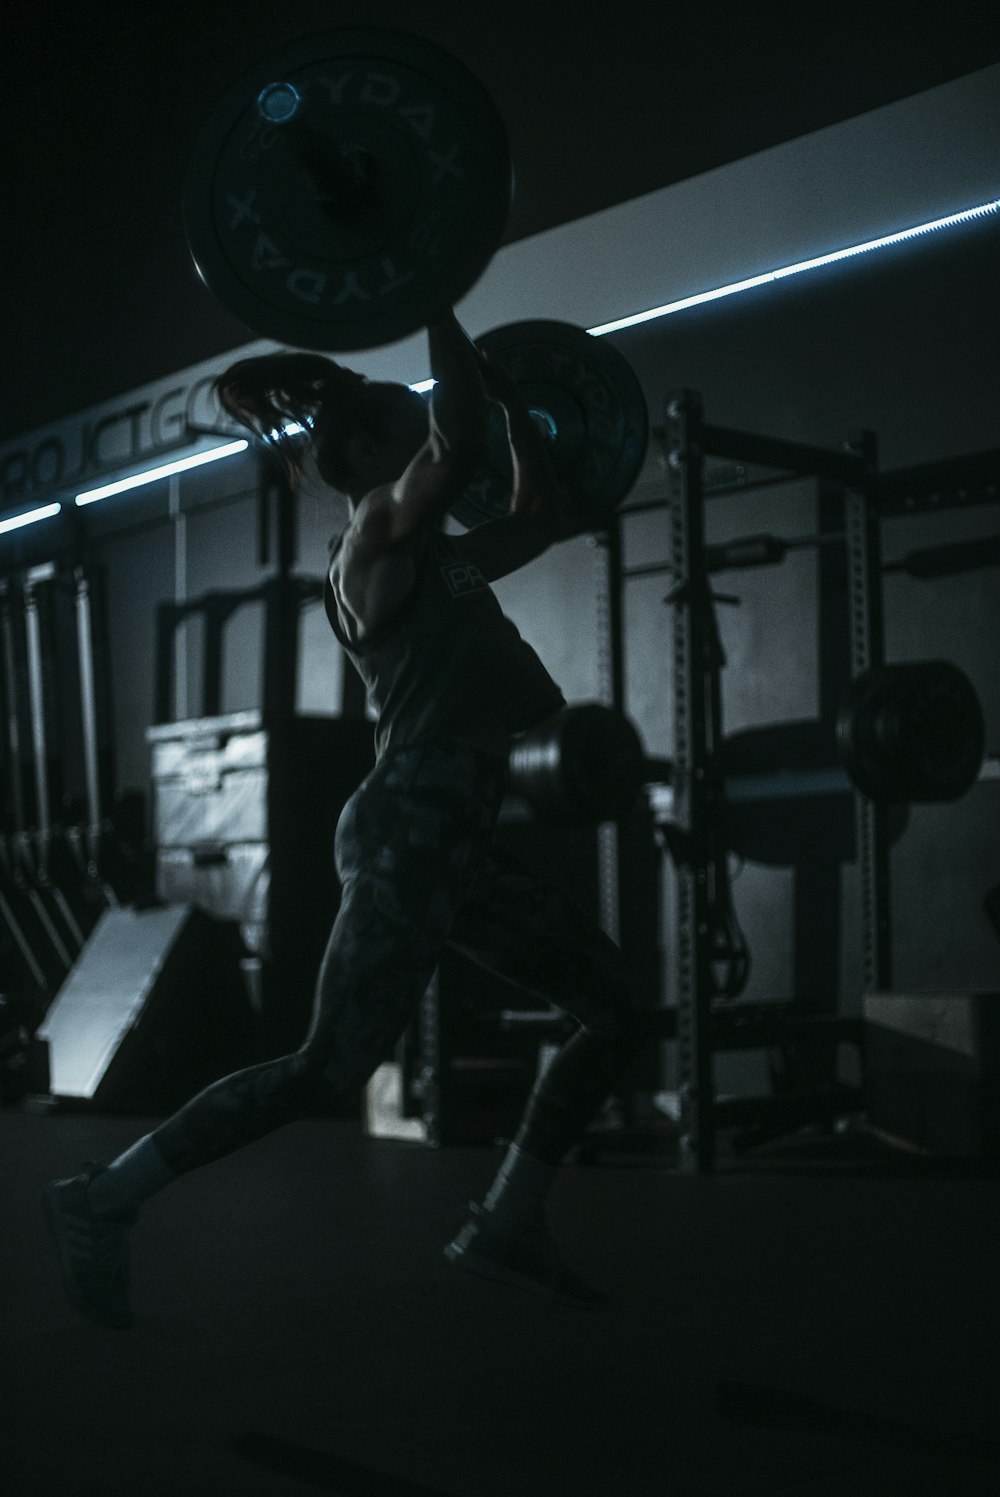 a man lifting a barbell in a dark gym